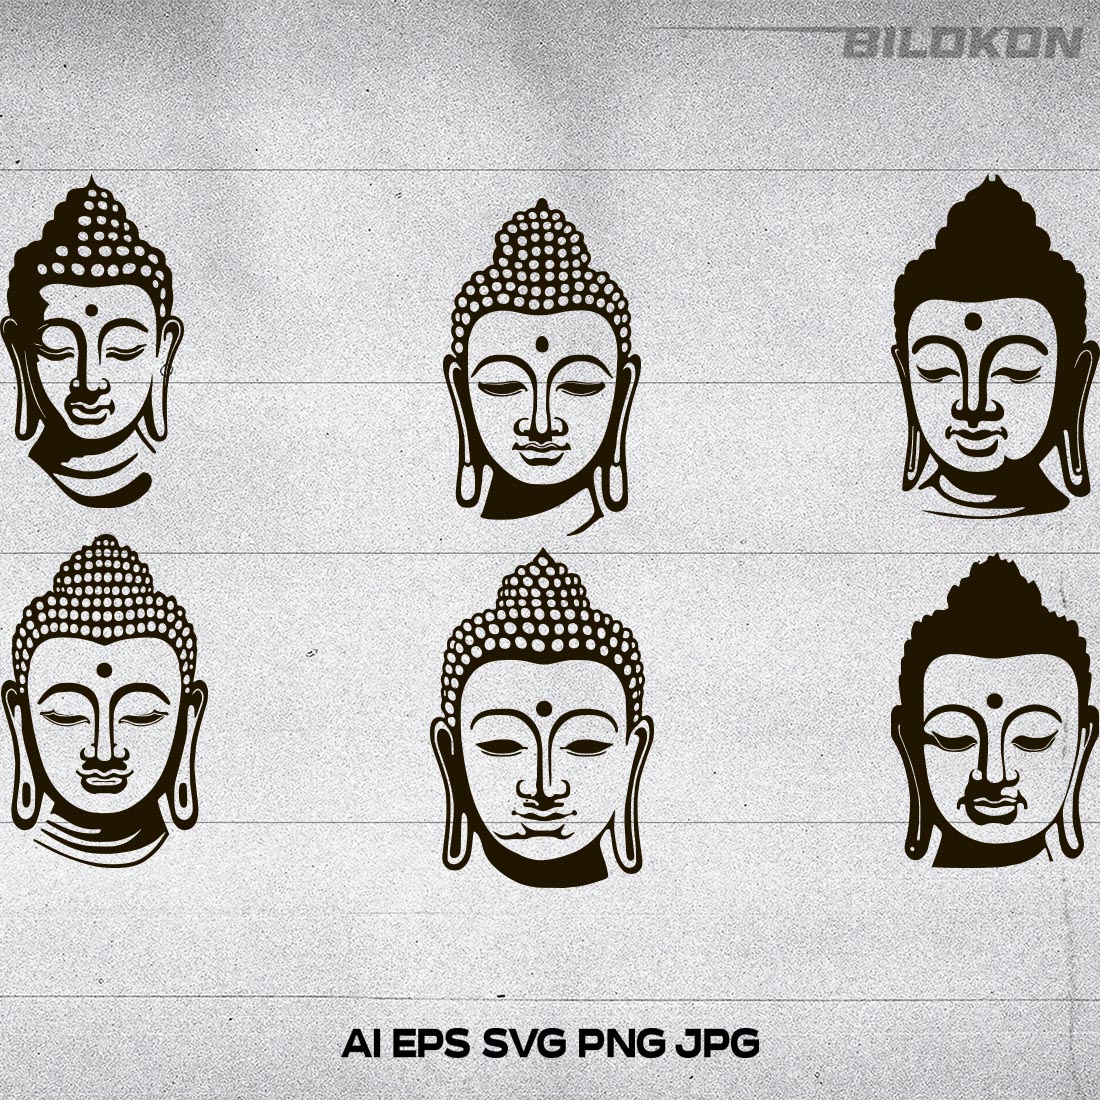 buddha face silhouette